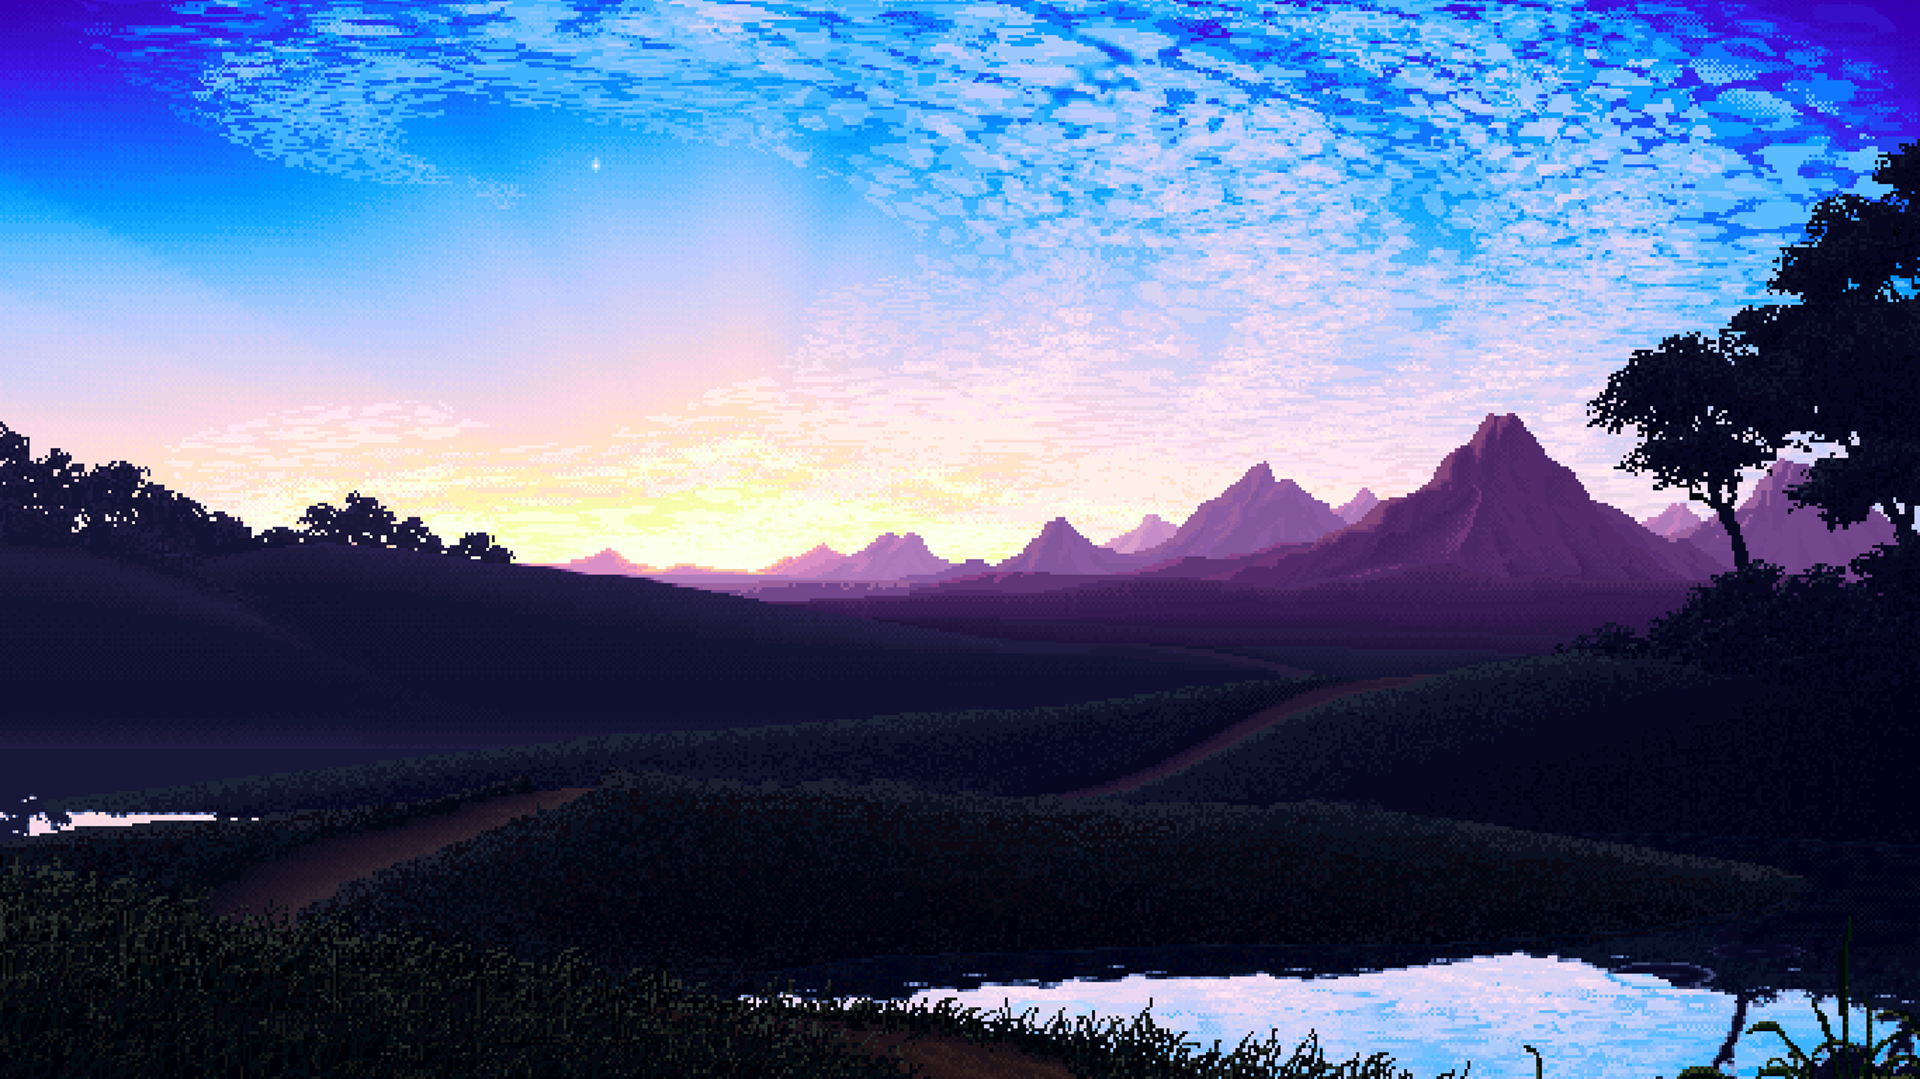 Arte de pixel  Aesthetic desktop wallpaper, Pixel art landscape